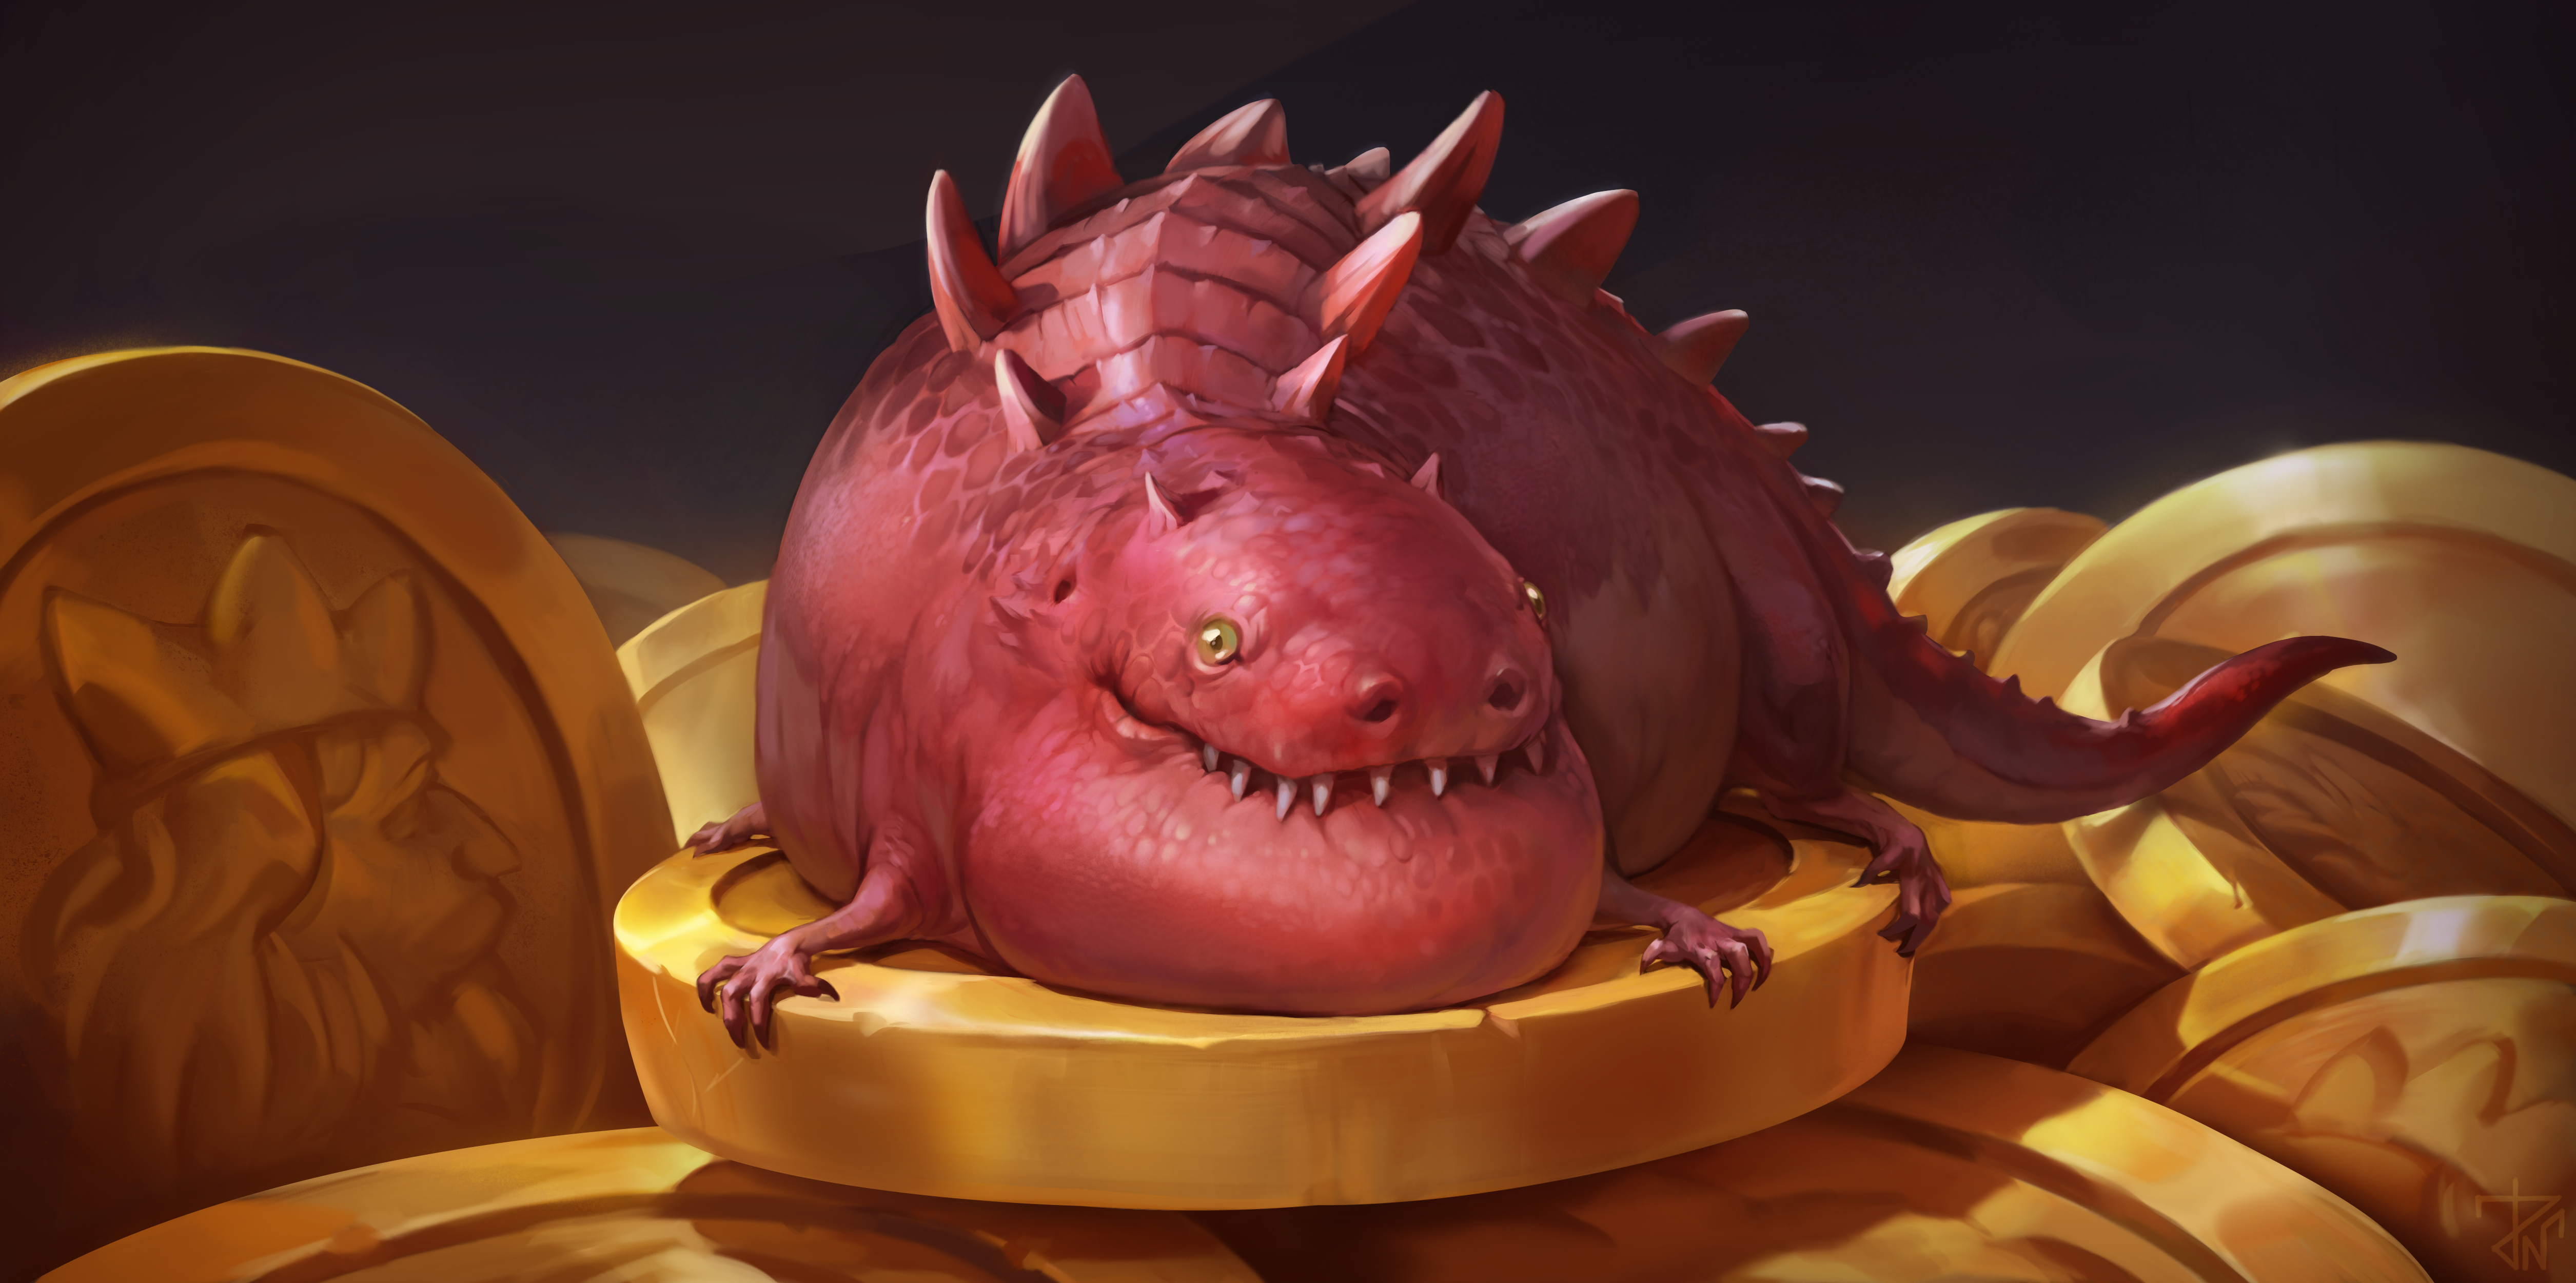 Coin Dragon Gold 5021x2500